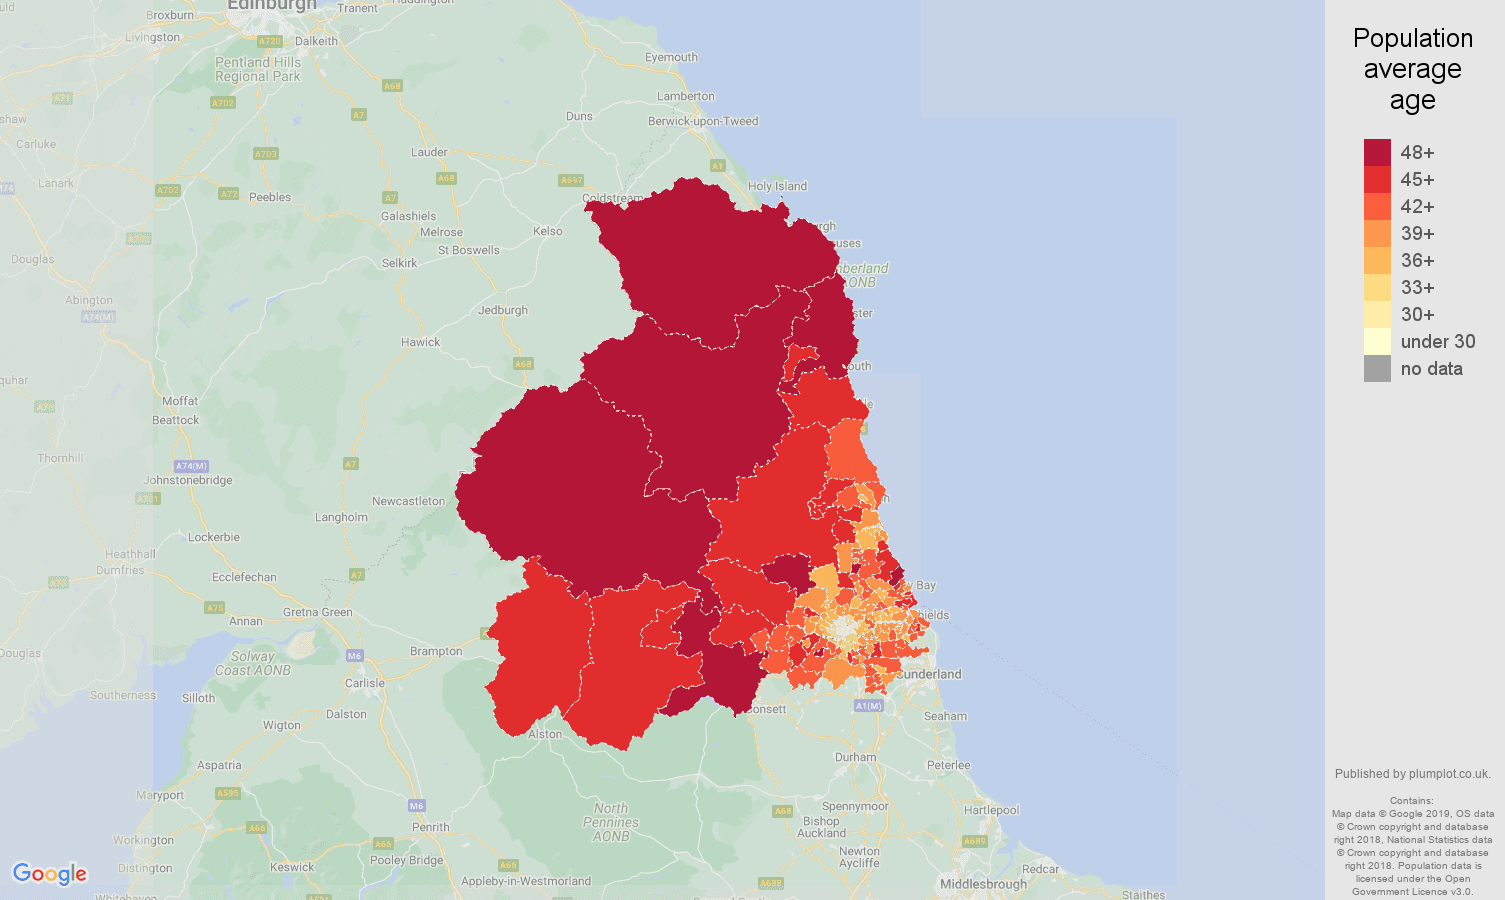 Newcastle upon Tyne population average age map